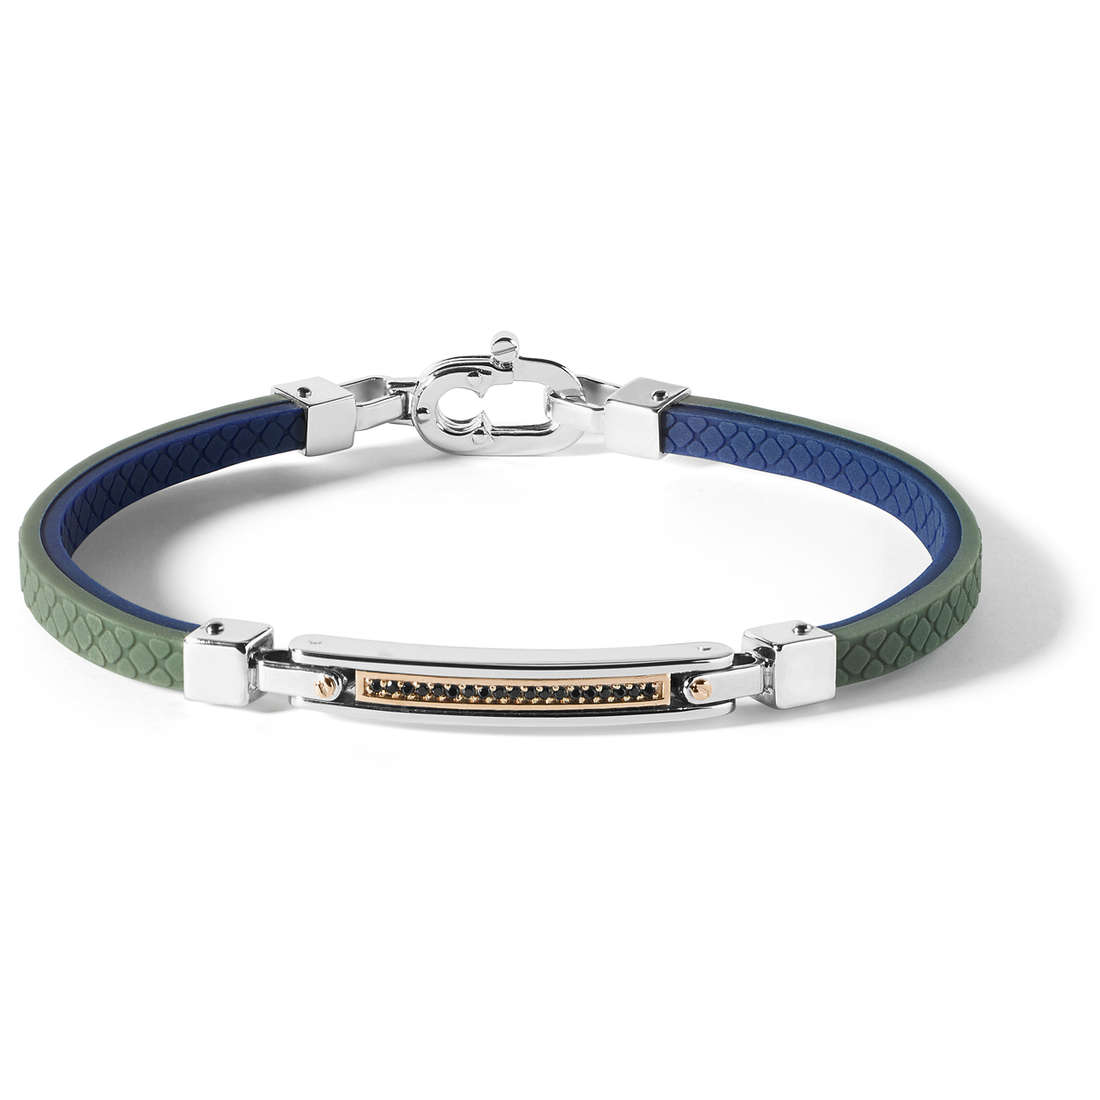 UBR 760 Reverse Jewelry Men’s Bracelet